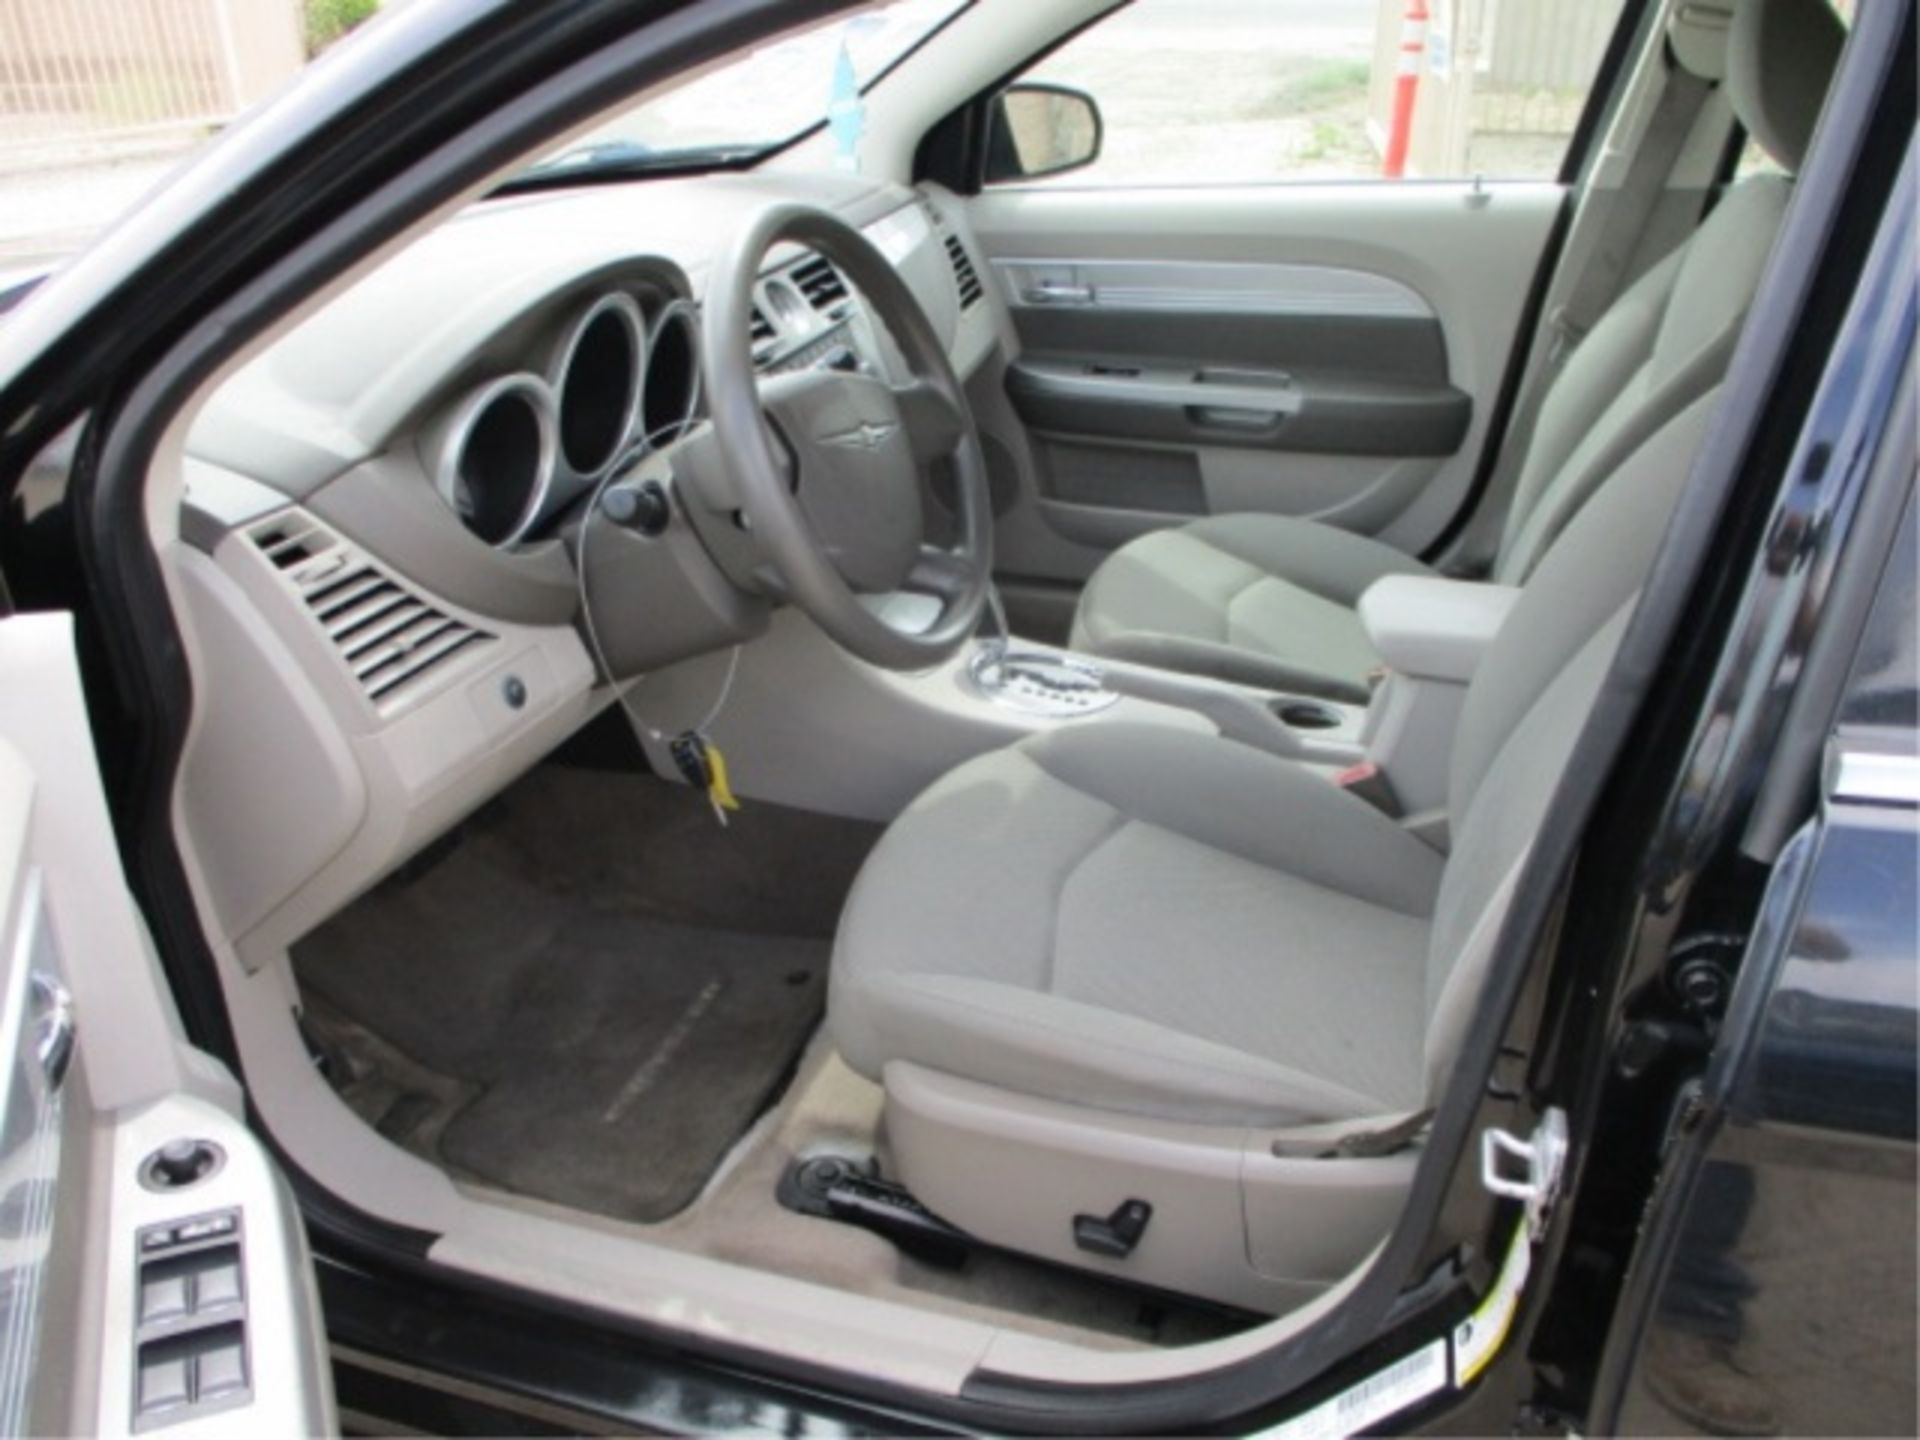 2007 Chrysler Sebring Sedan, 2.7L V6 Gas, Automatic, S/N: 1C3LC56R17N524072, Miles/Hours - 137410 - Image 10 of 22